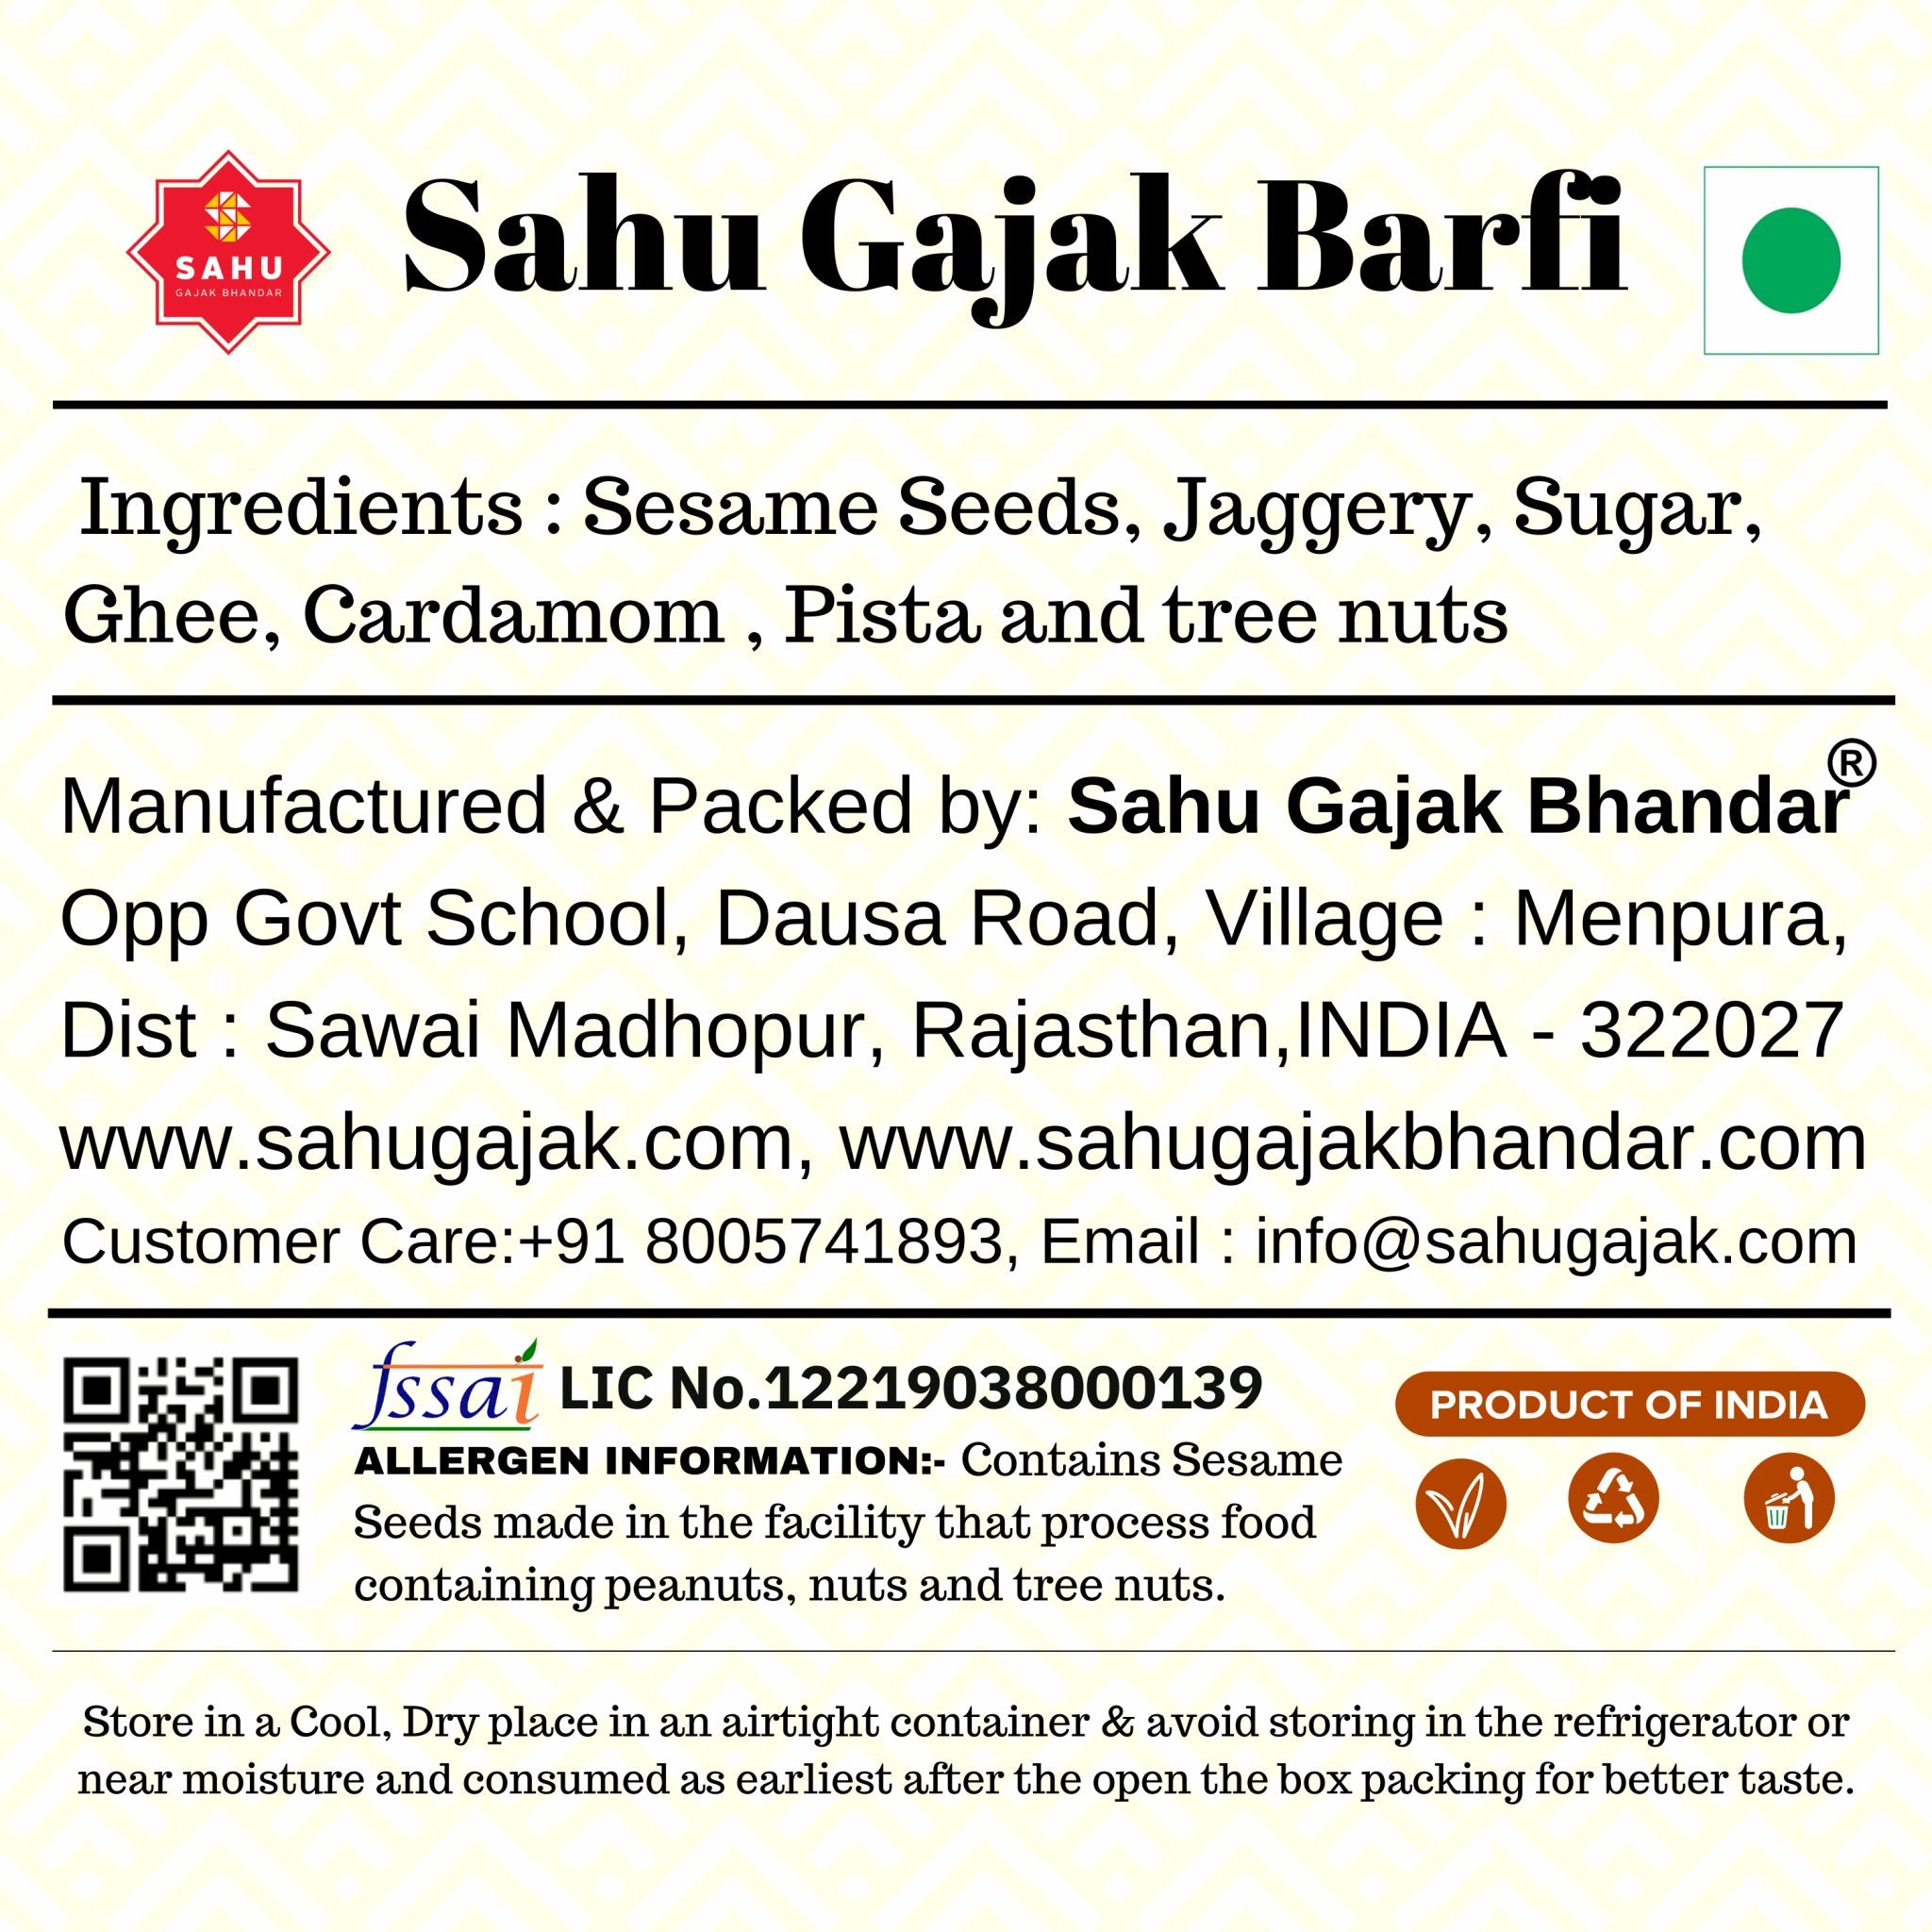 an advertisement for sabu gajak barfi